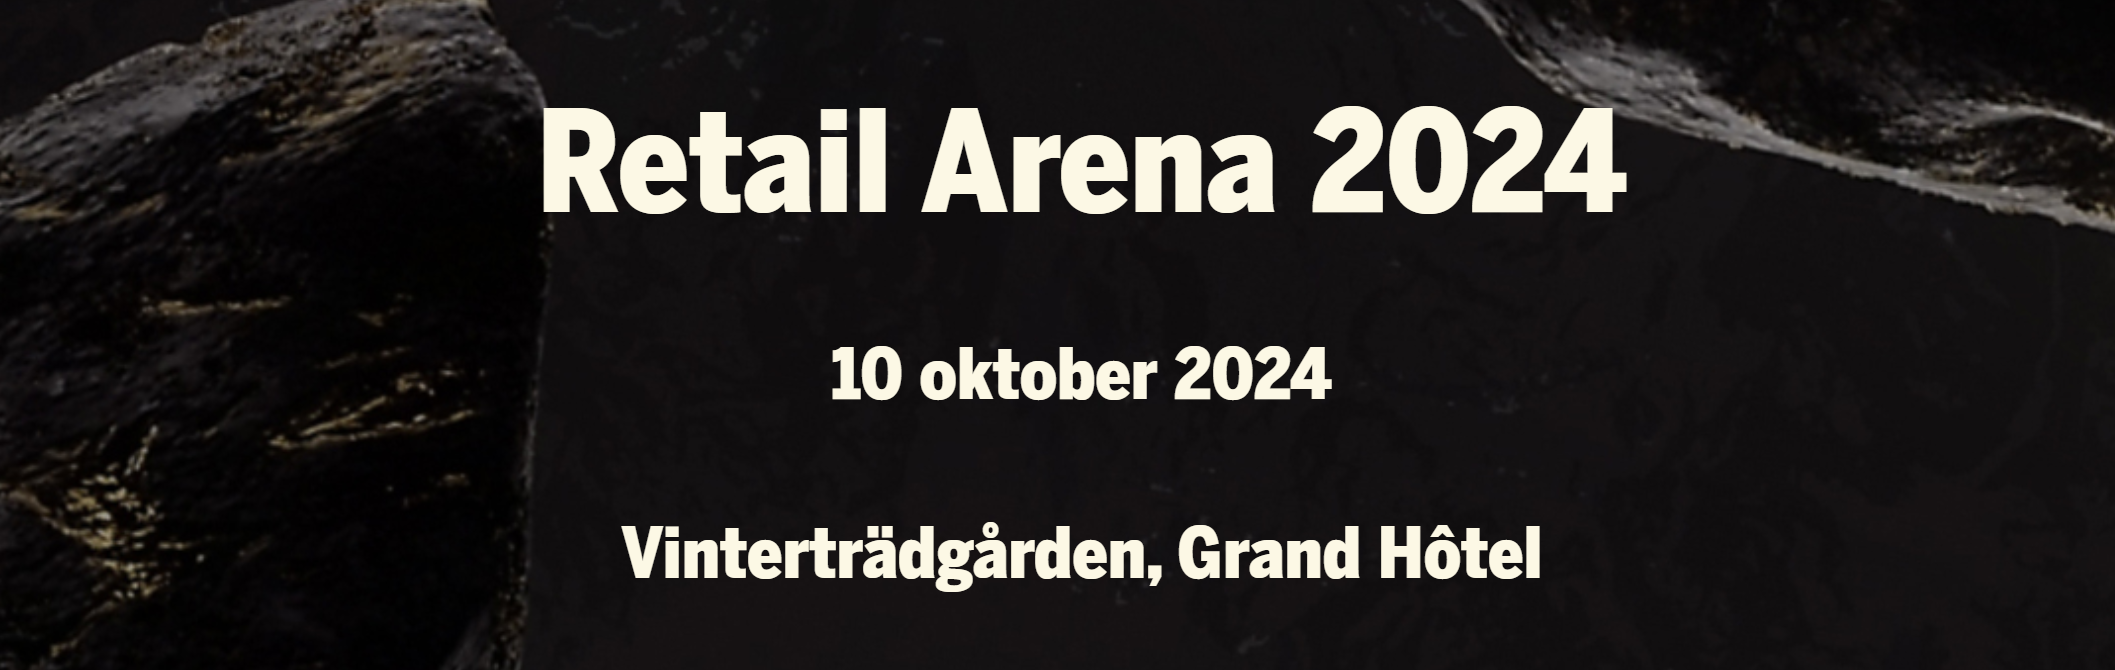 Retail Arena 2024